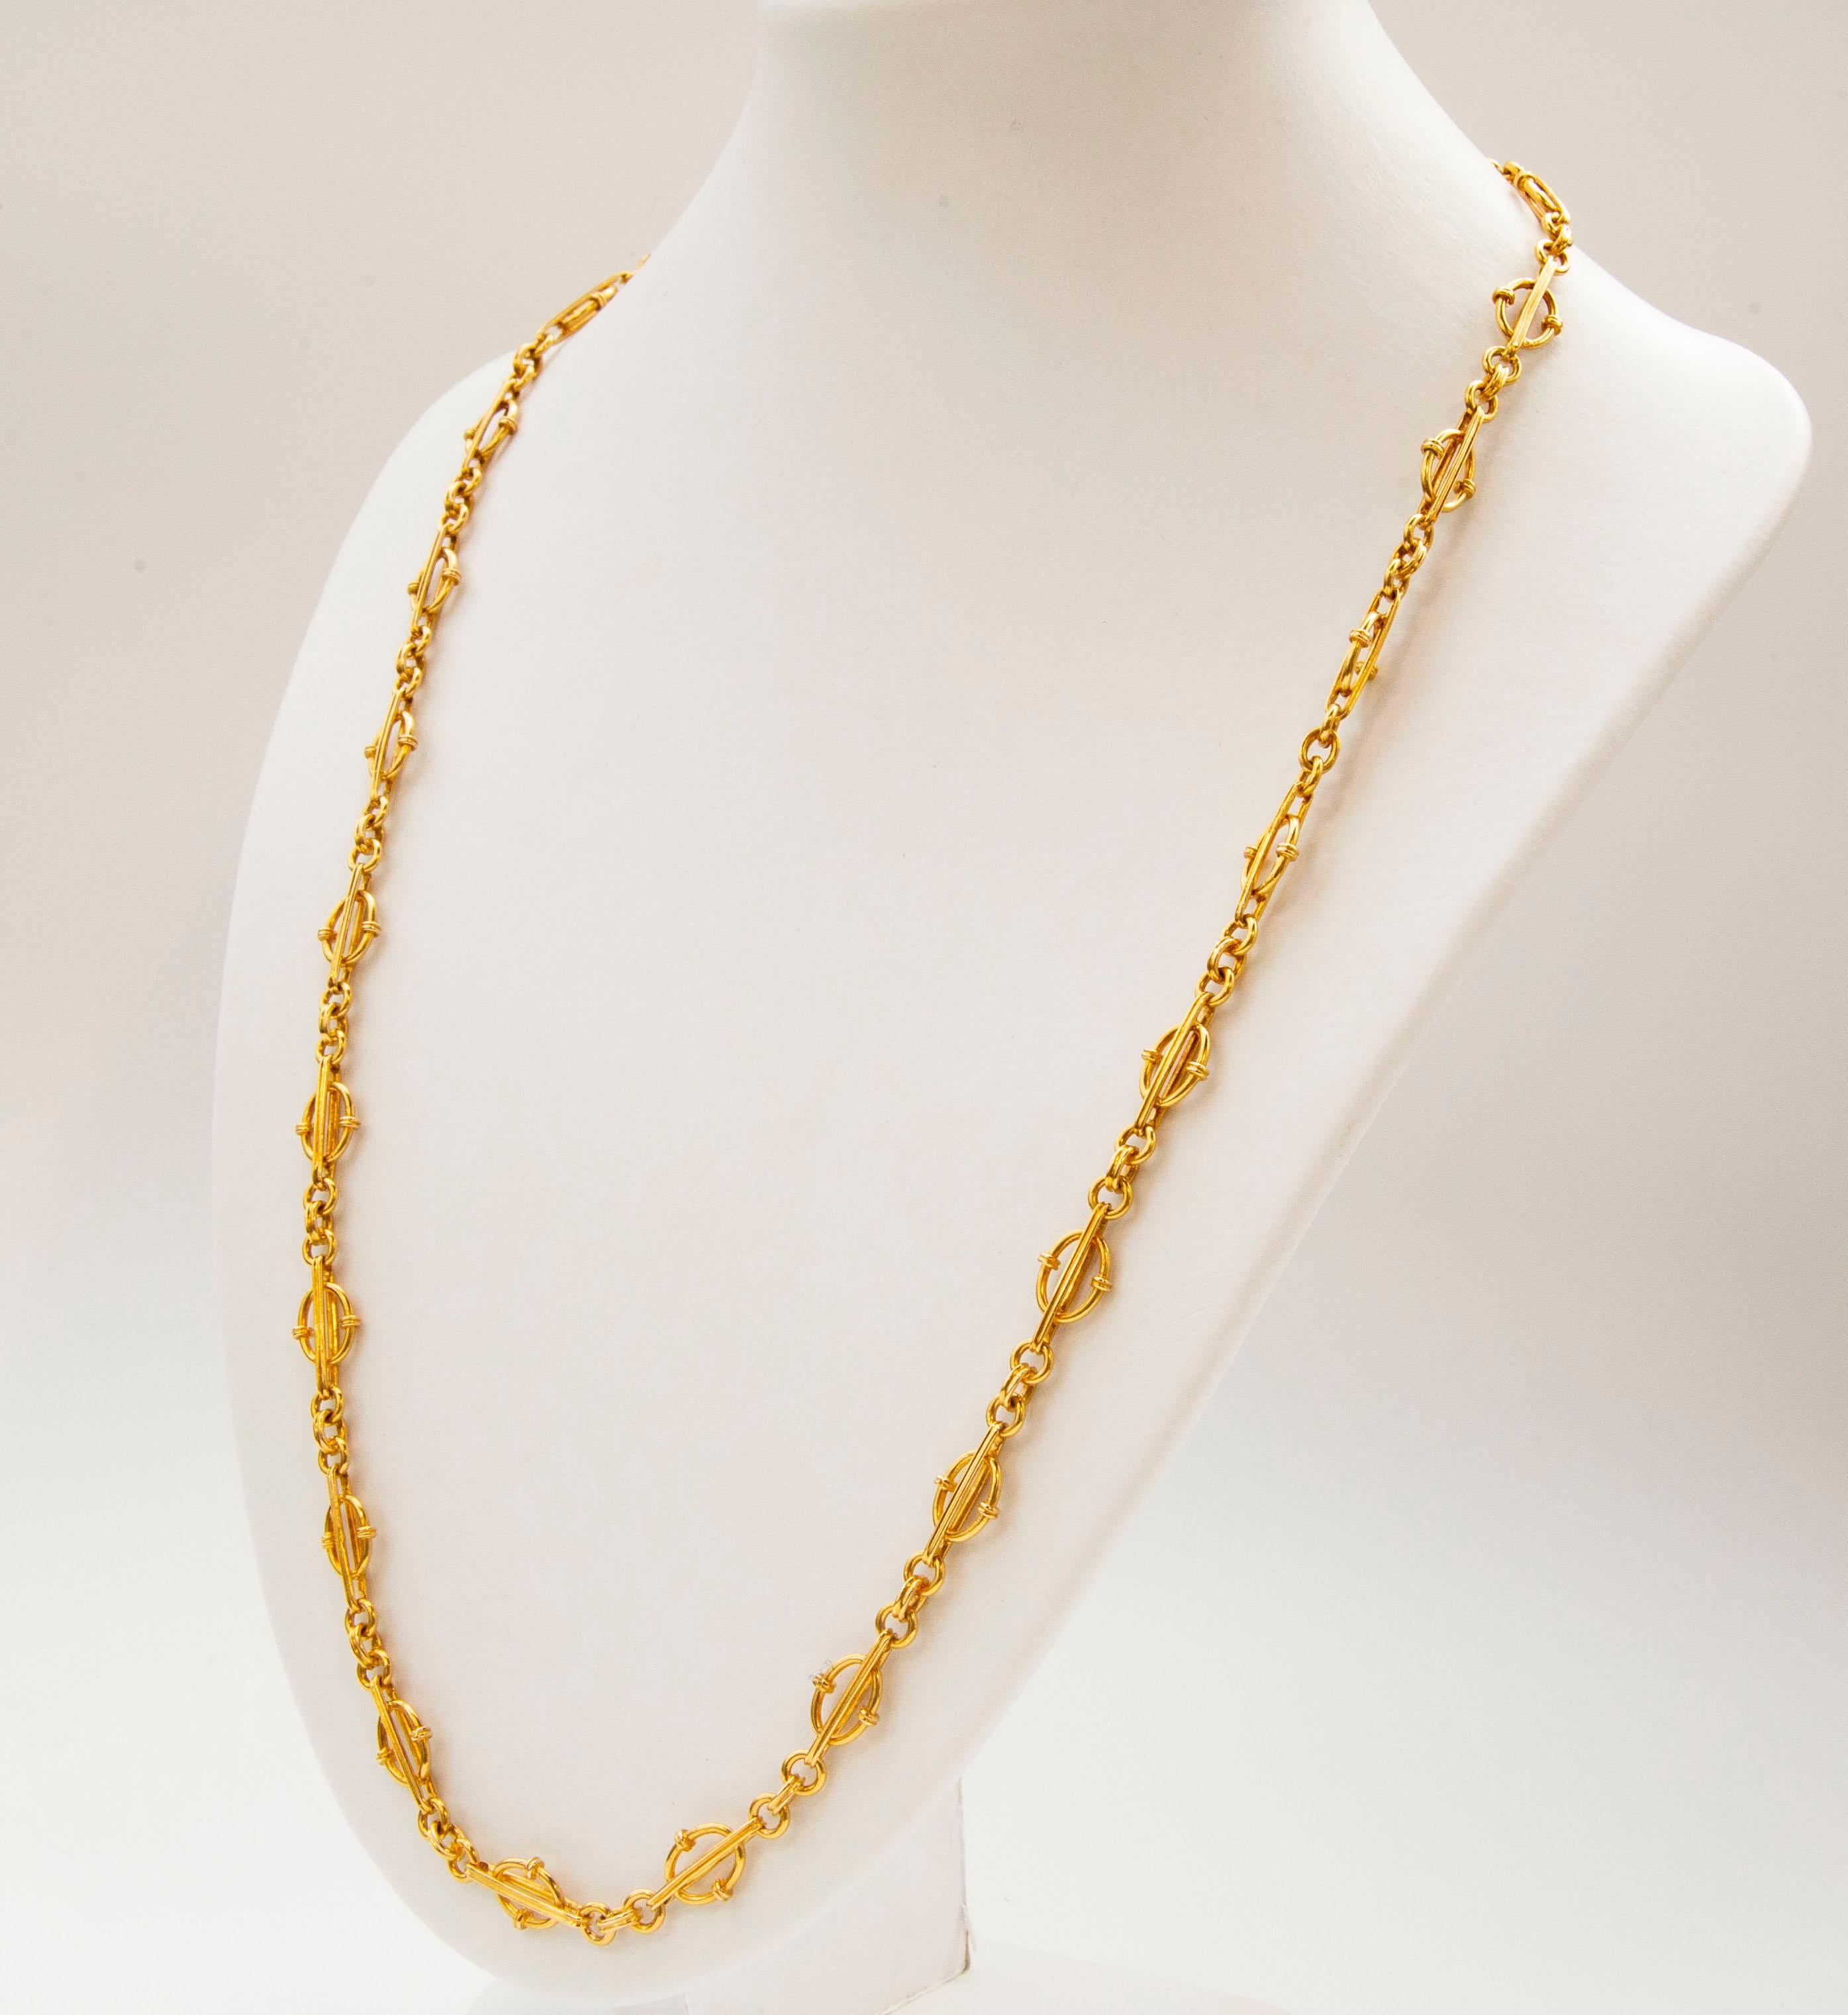 18 Karat Solid Gold Fantasy Link Chain Necklace In Good Condition For Sale In Arnhem, NL